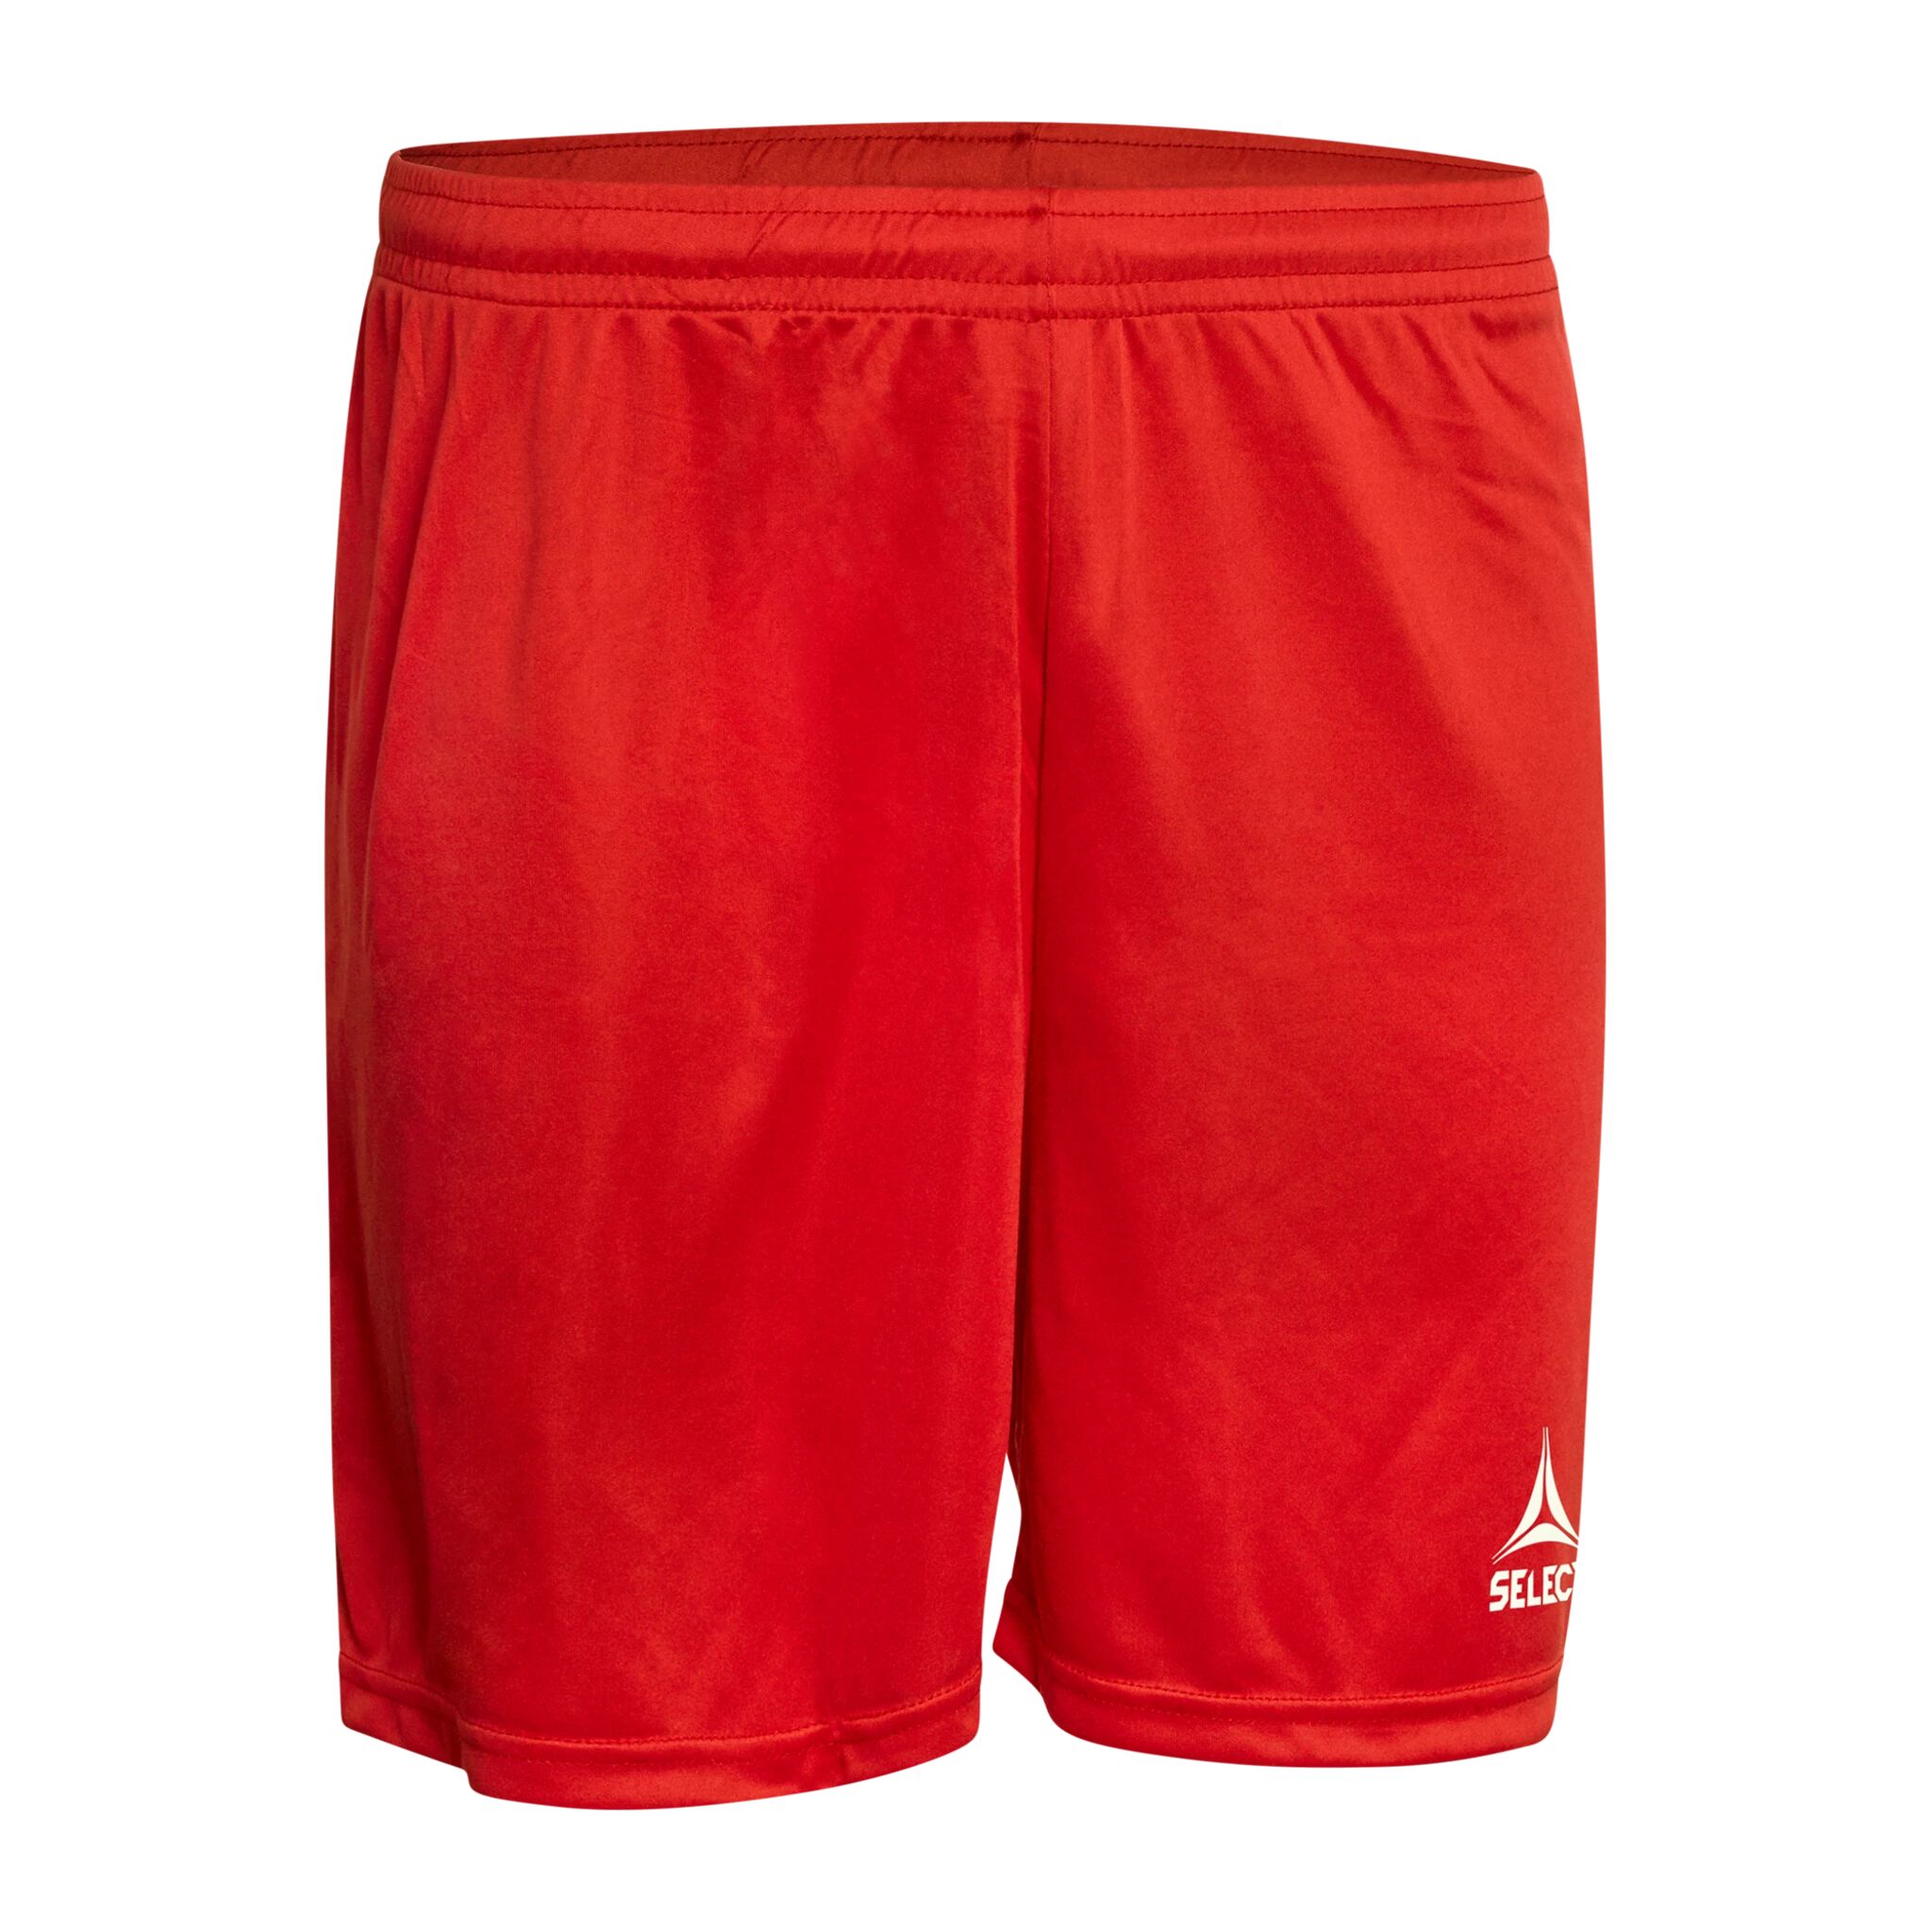 Select Player shorts Pisa, shorts senior 152 RED